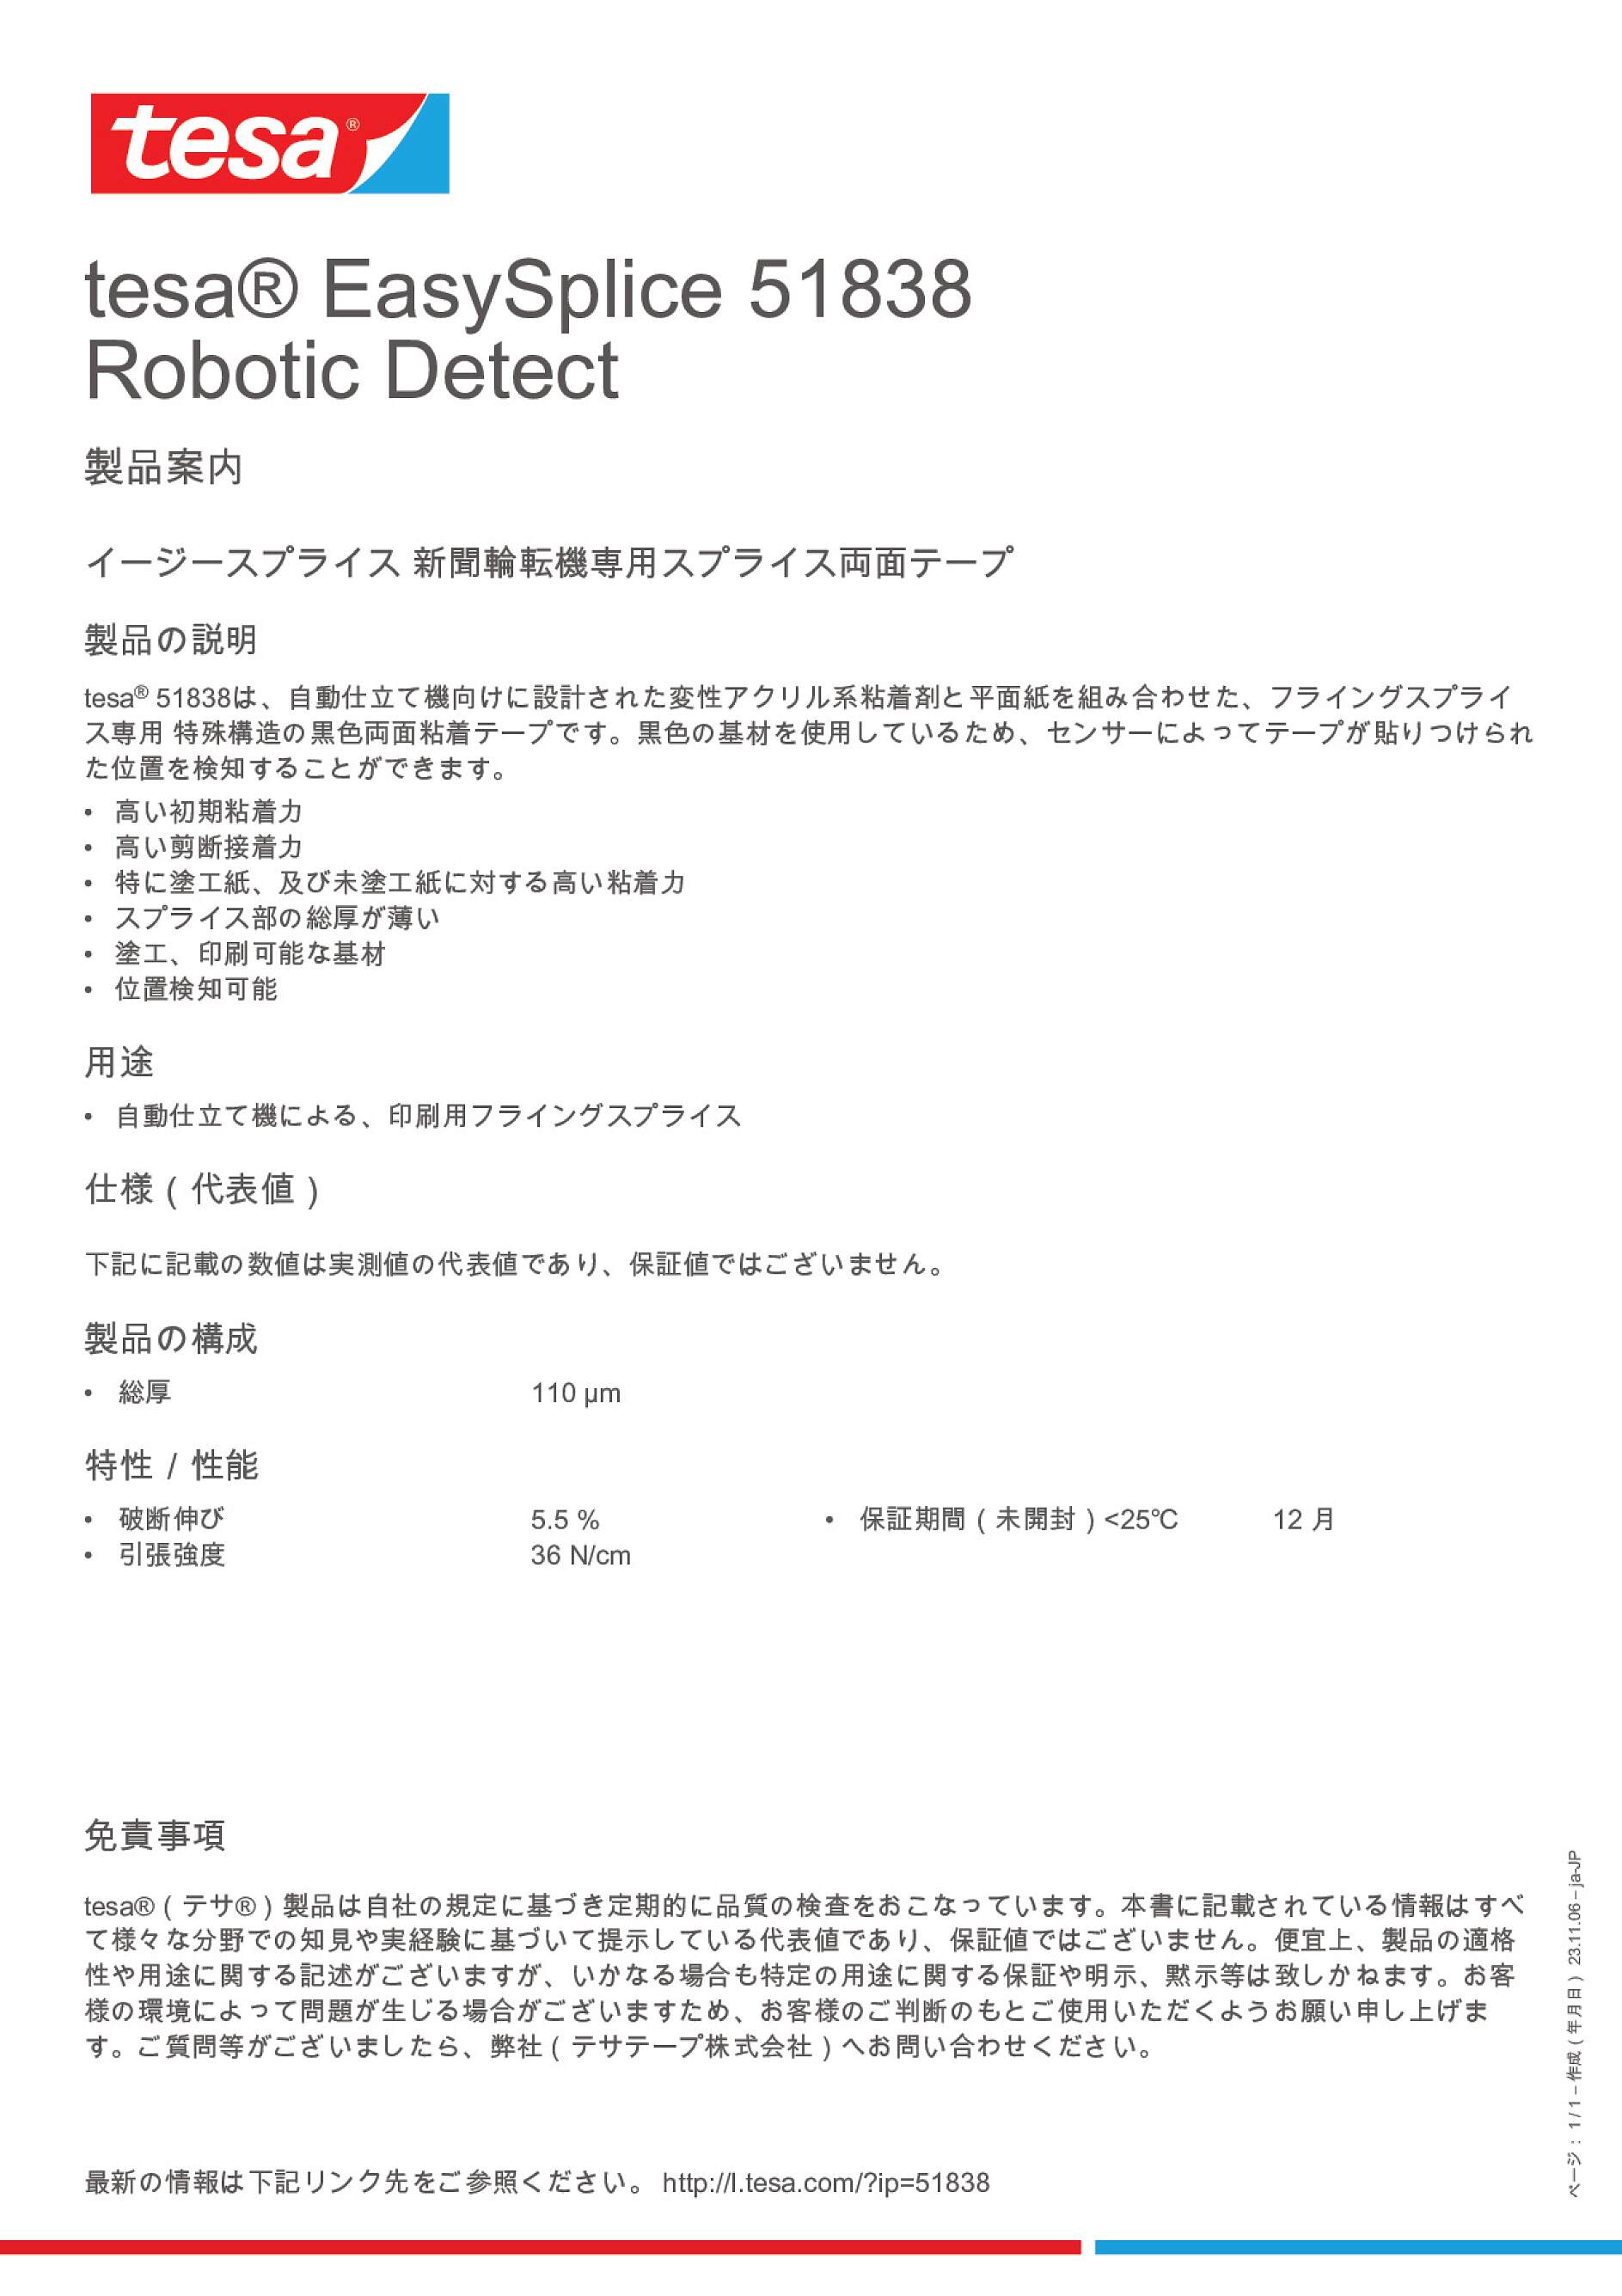 tesa® EasySplice 51838 Robotic Detect - tesa